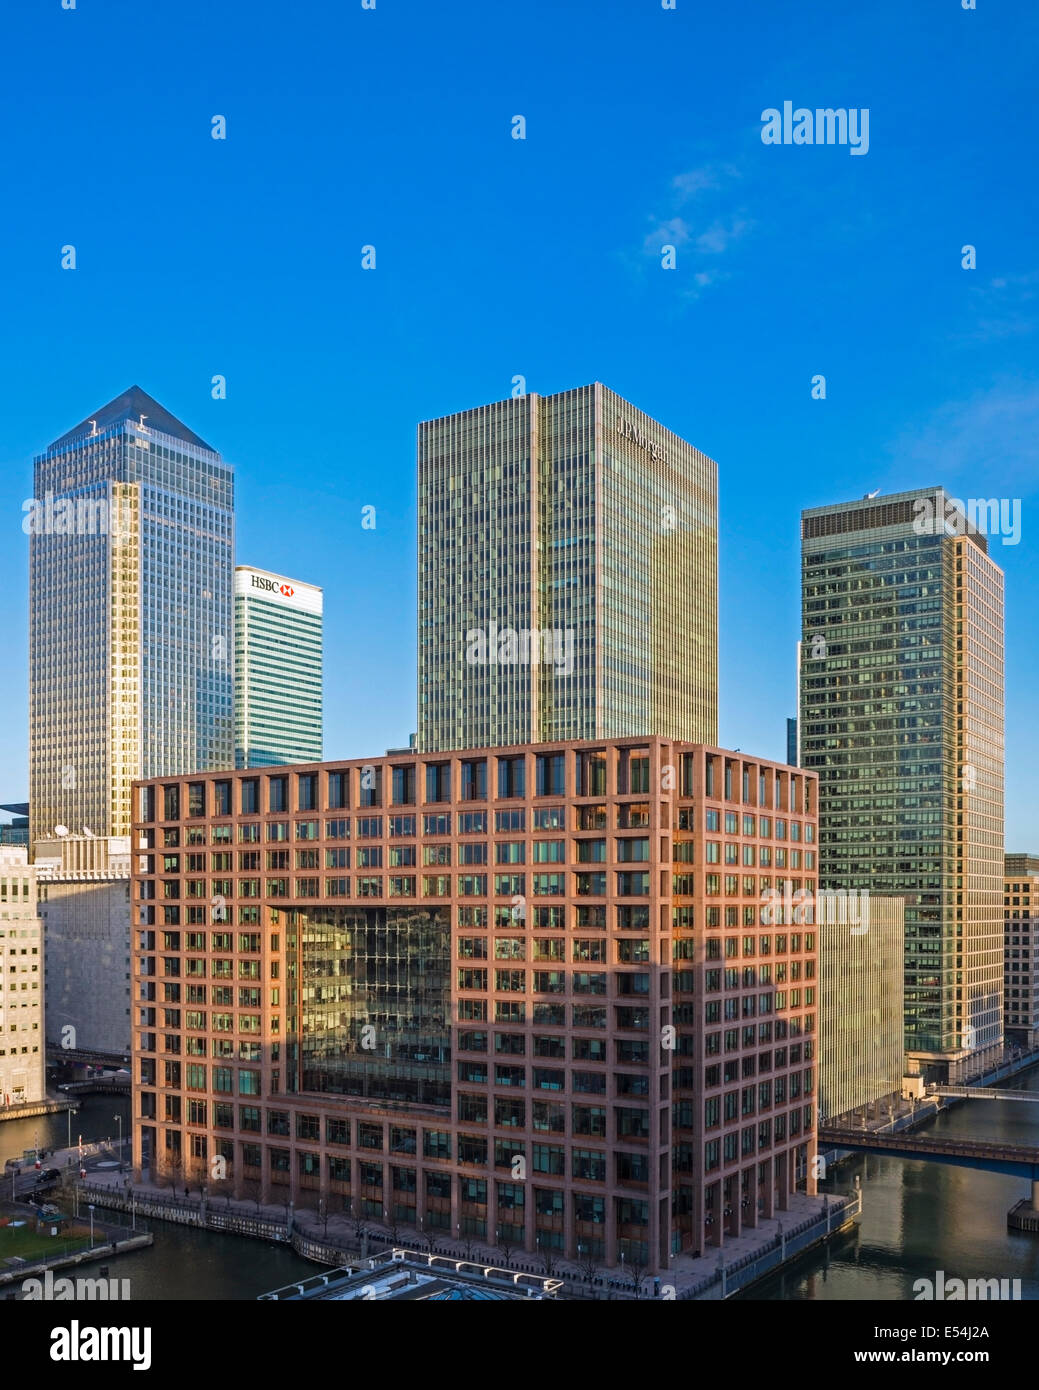 View of Canary Wharf Tower, HSBC Bank, Morgan Stanley, J P Morgan and 40 Bank Street in Canary Wharf, London, UK Stock Photo